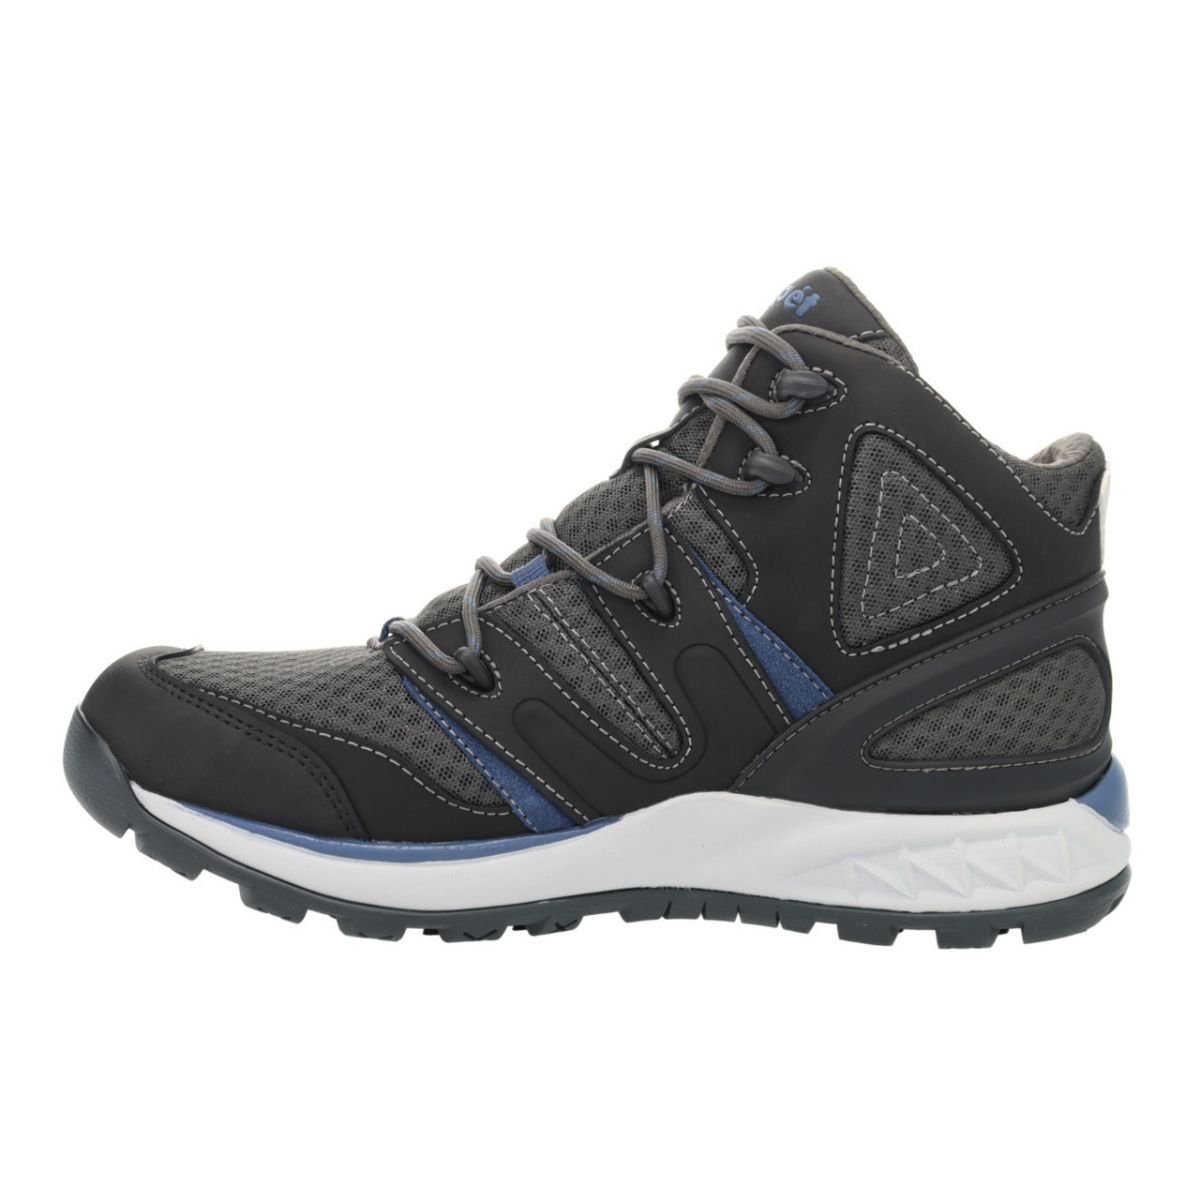 Propet Men's Veymont Waterproof Hiking Boot Grey/Blue - MOA022SGRB GREY/BLUE - GREY/BLUE, 12 X-Wide